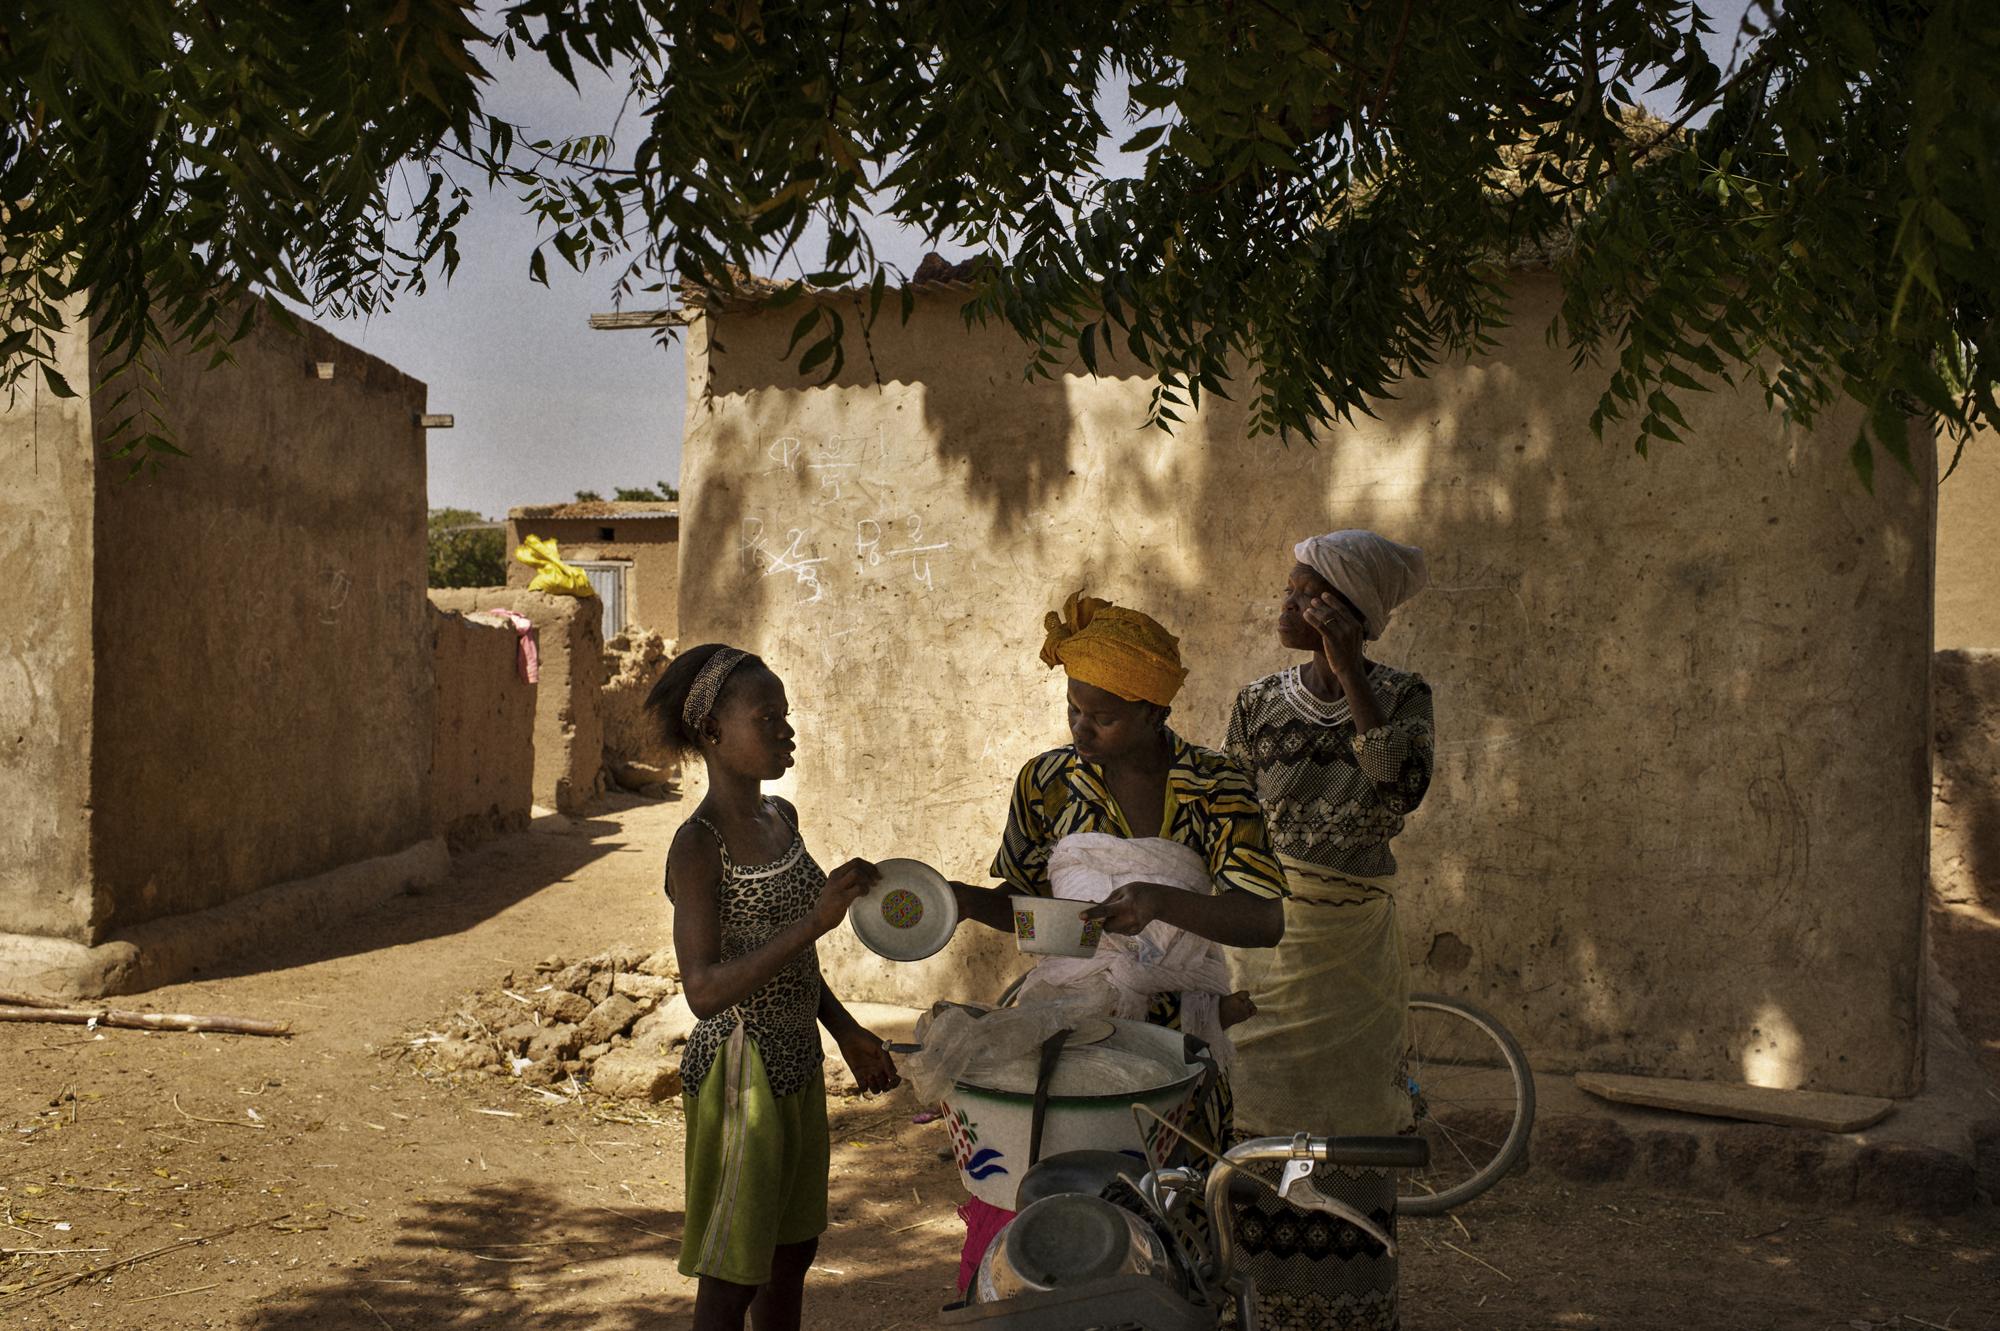 Microcredit / Burkina Faso - Burkina Faso, Pousg Ziga.
November 2011.
Kadidiata...